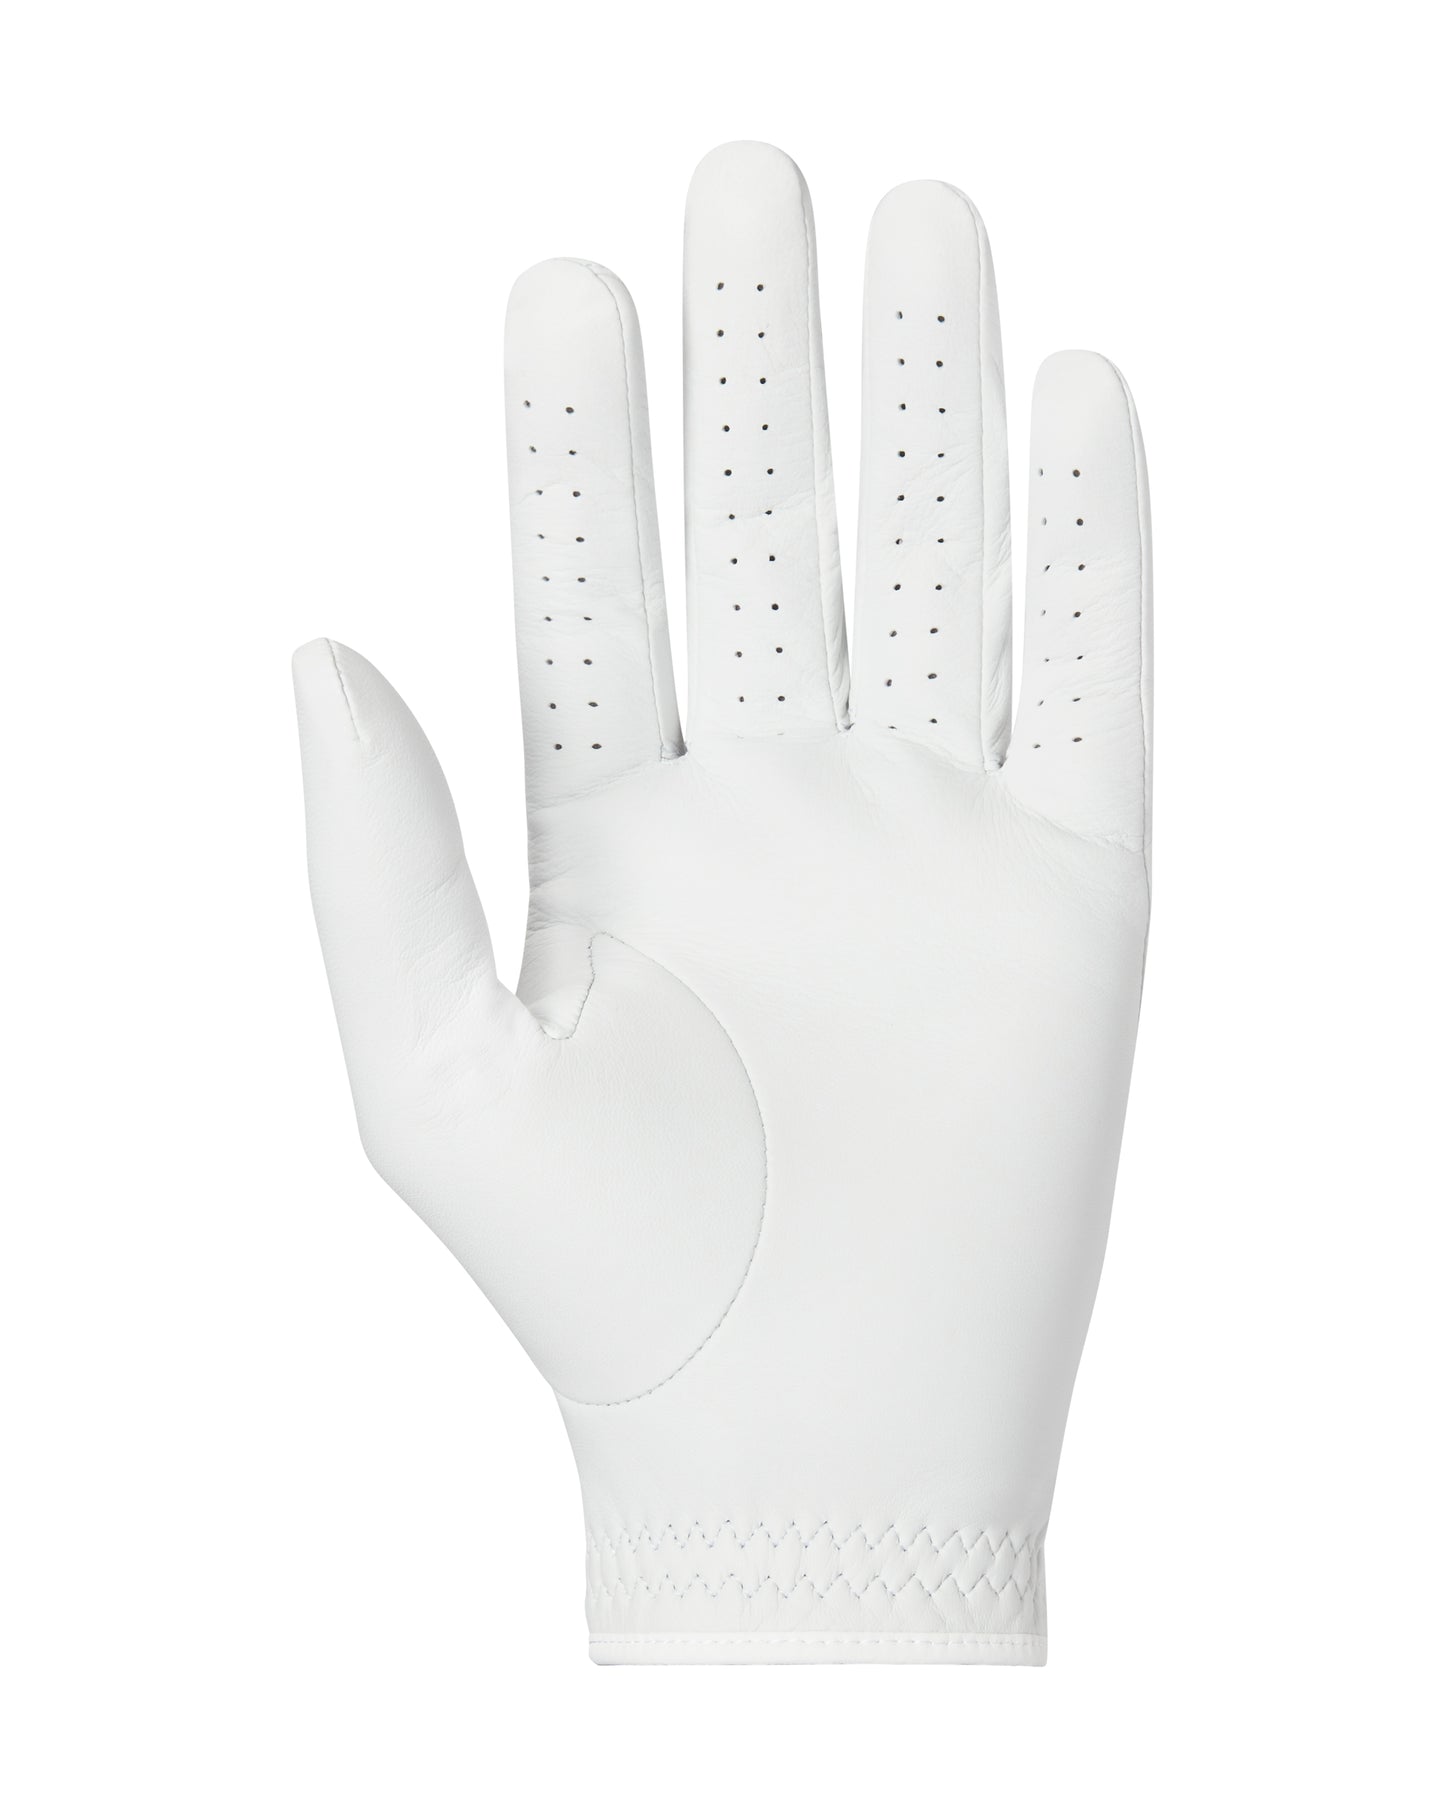 Ugogo Golf premium cabretta leather glove white logo & trim